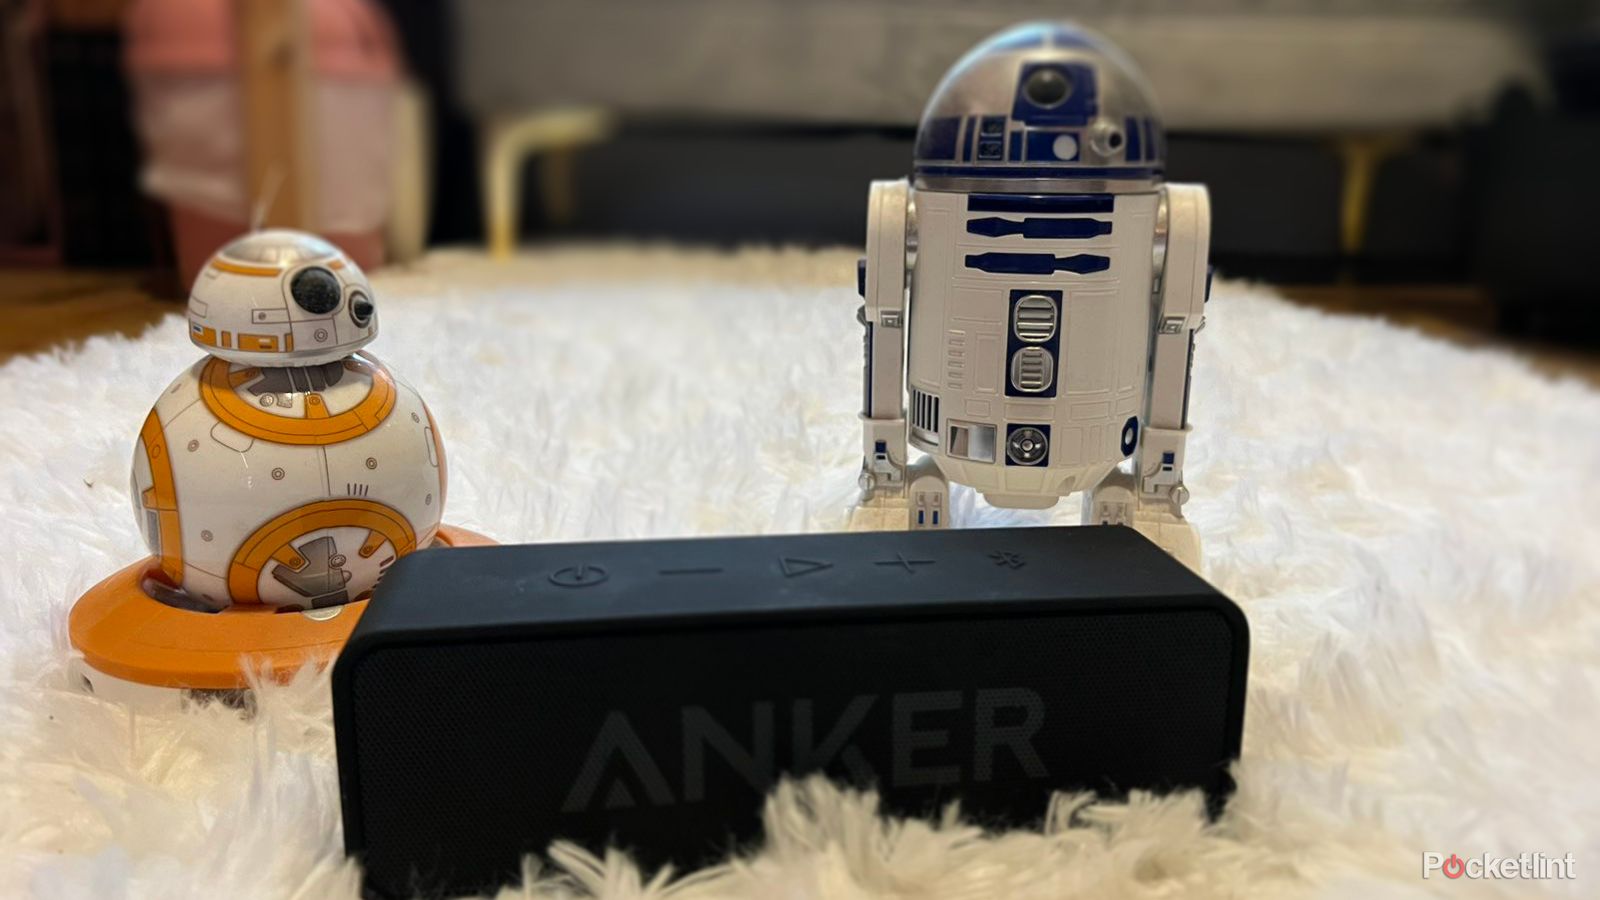 Anker Soundcore bluetooth speaker on carpet next to droids